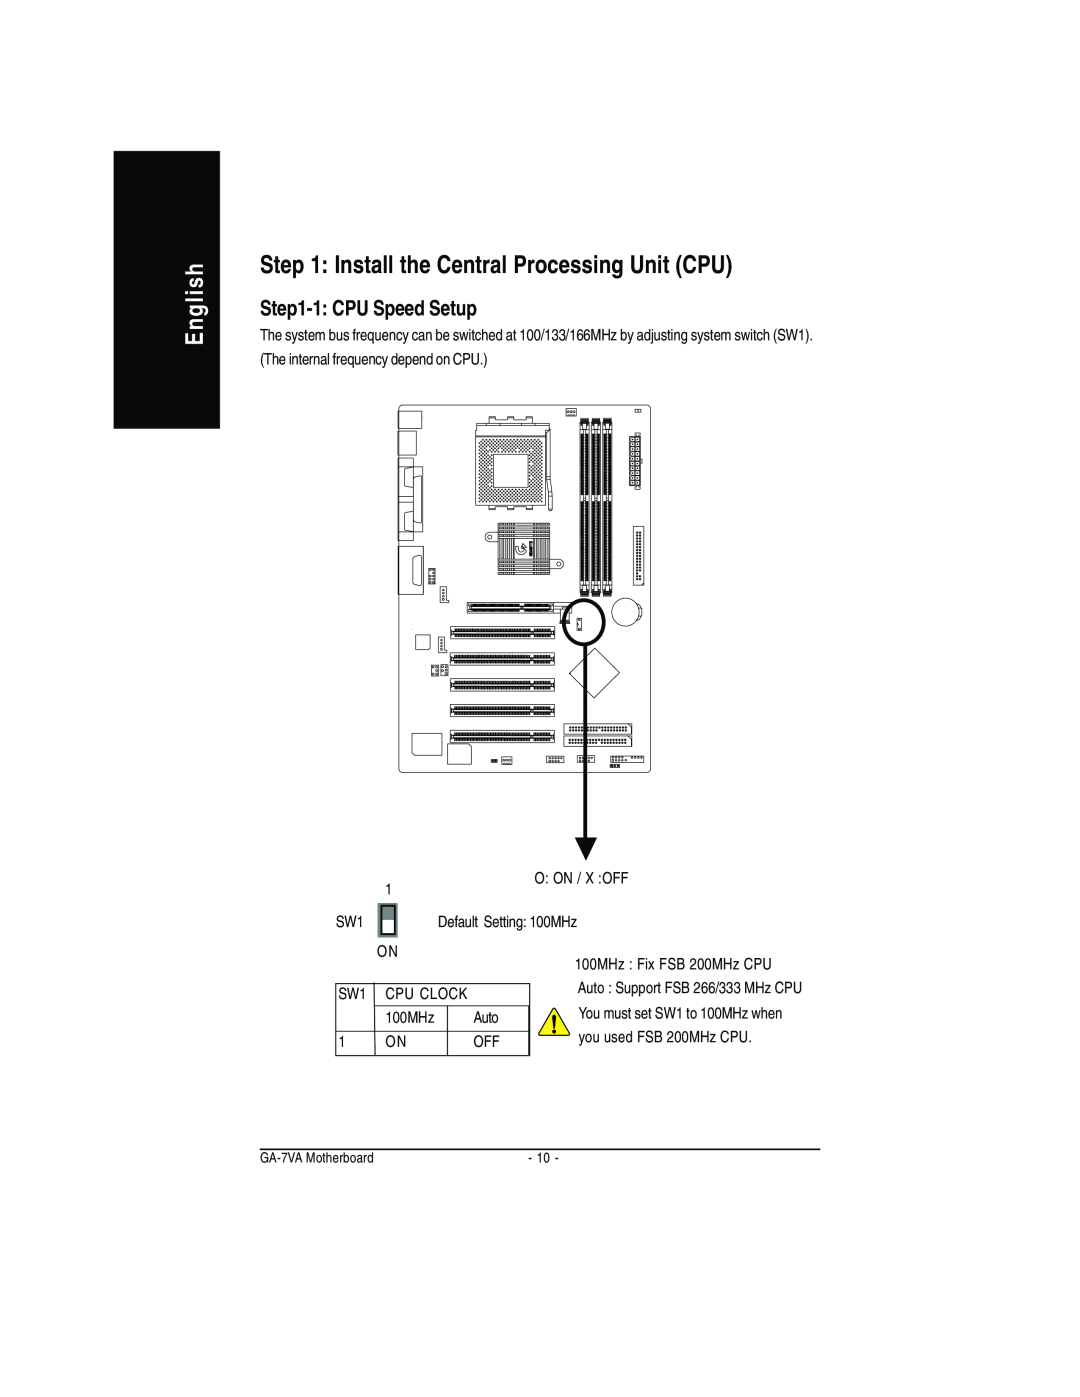 Gigabyte GA-7VA manual Install the Central Processing Unit CPU, English, 1 CPU Speed Setup 